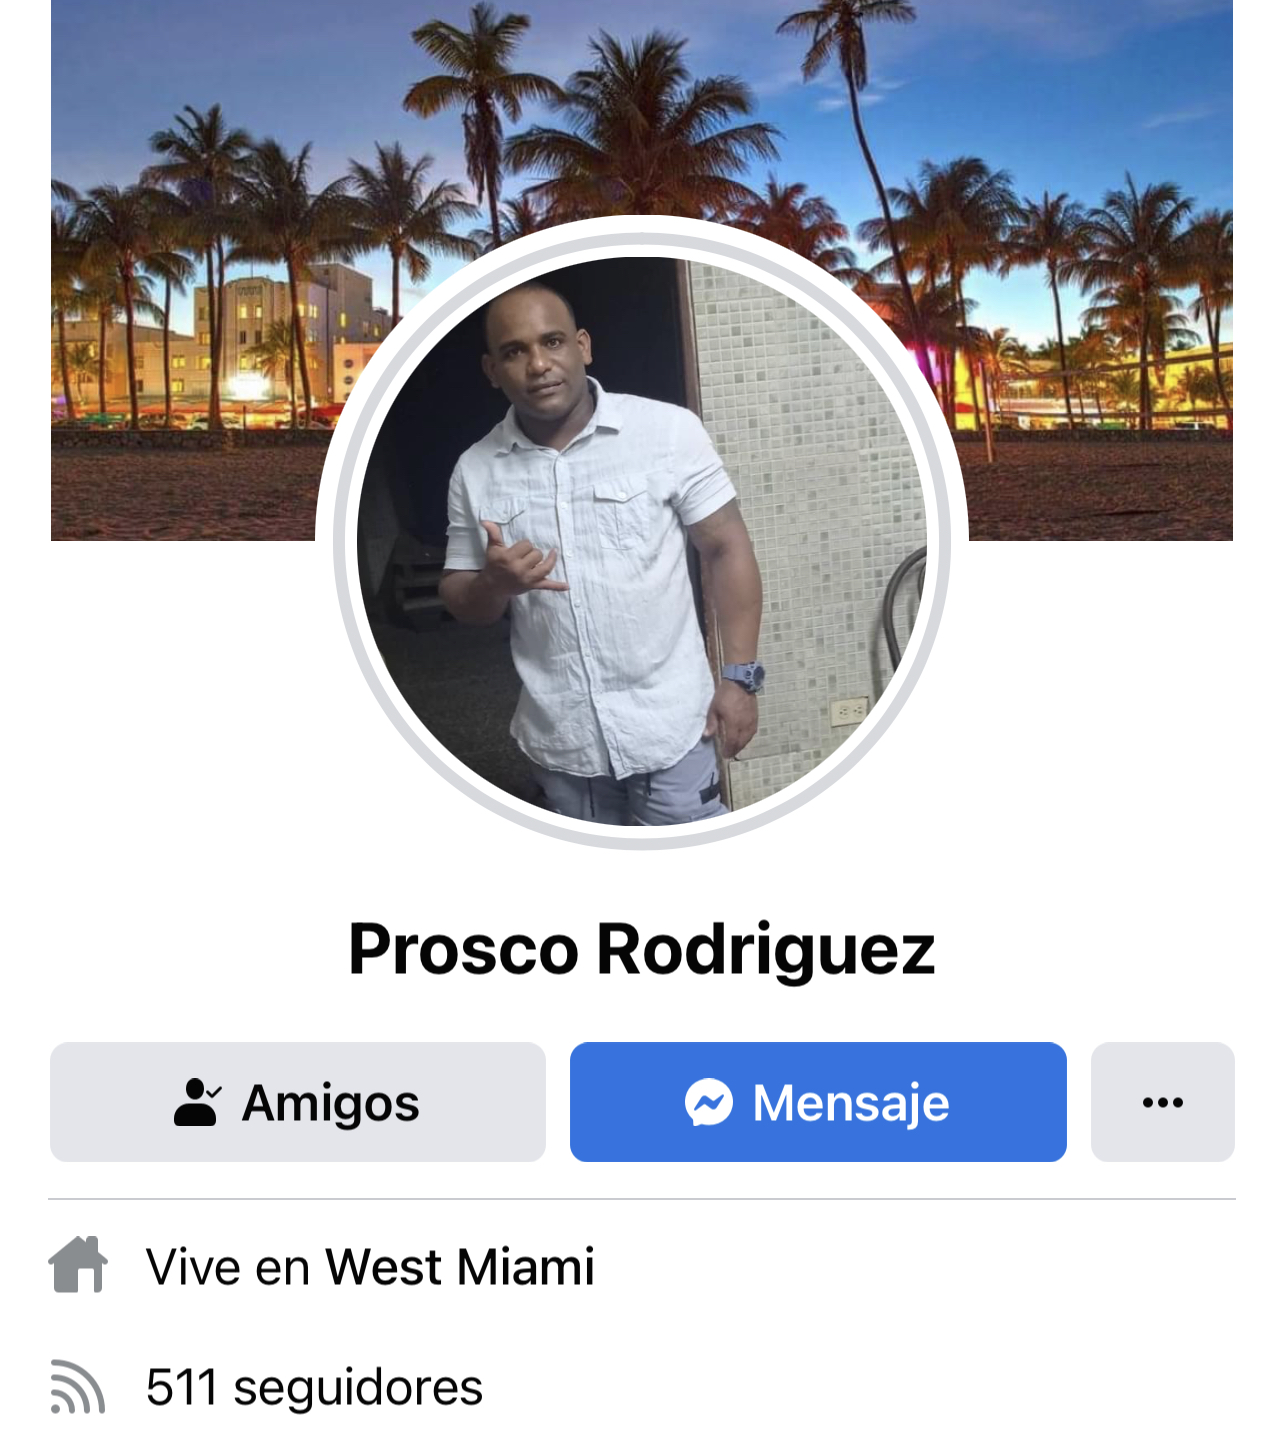 Prosco Rodriguez